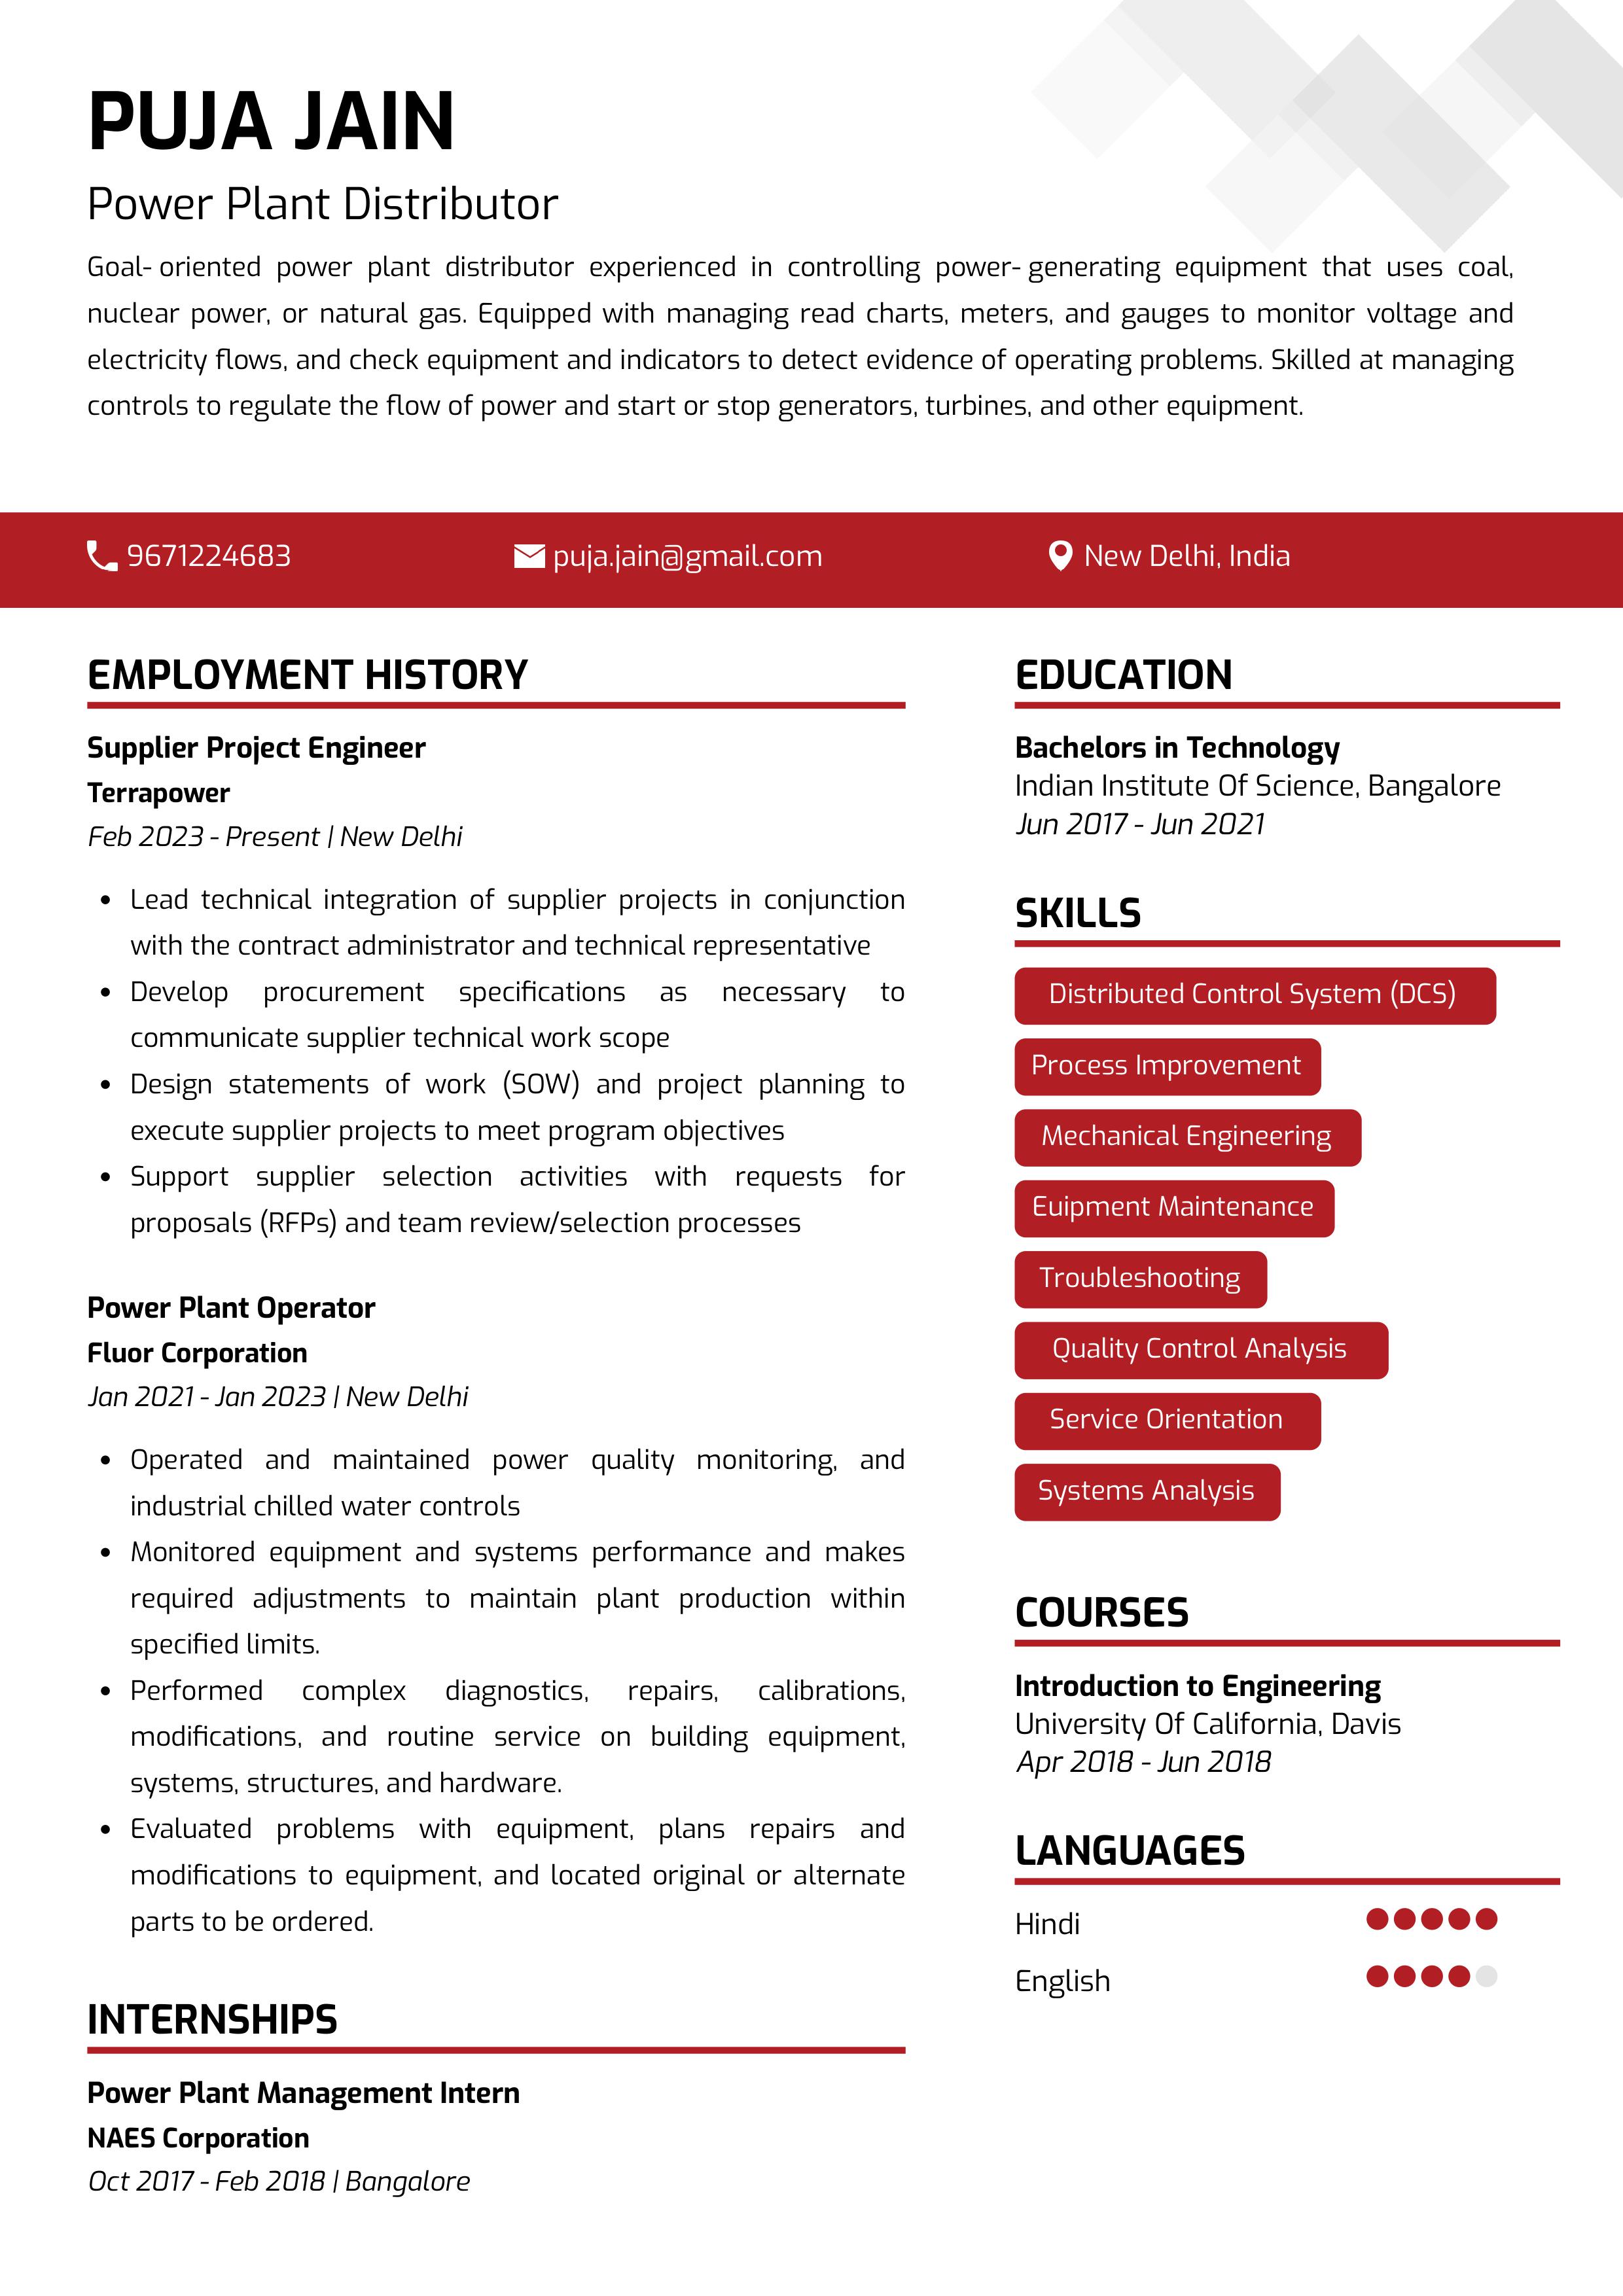 Sample Resume of Powerplant Distributor | Free Resume Templates & Samples on Resumod.co